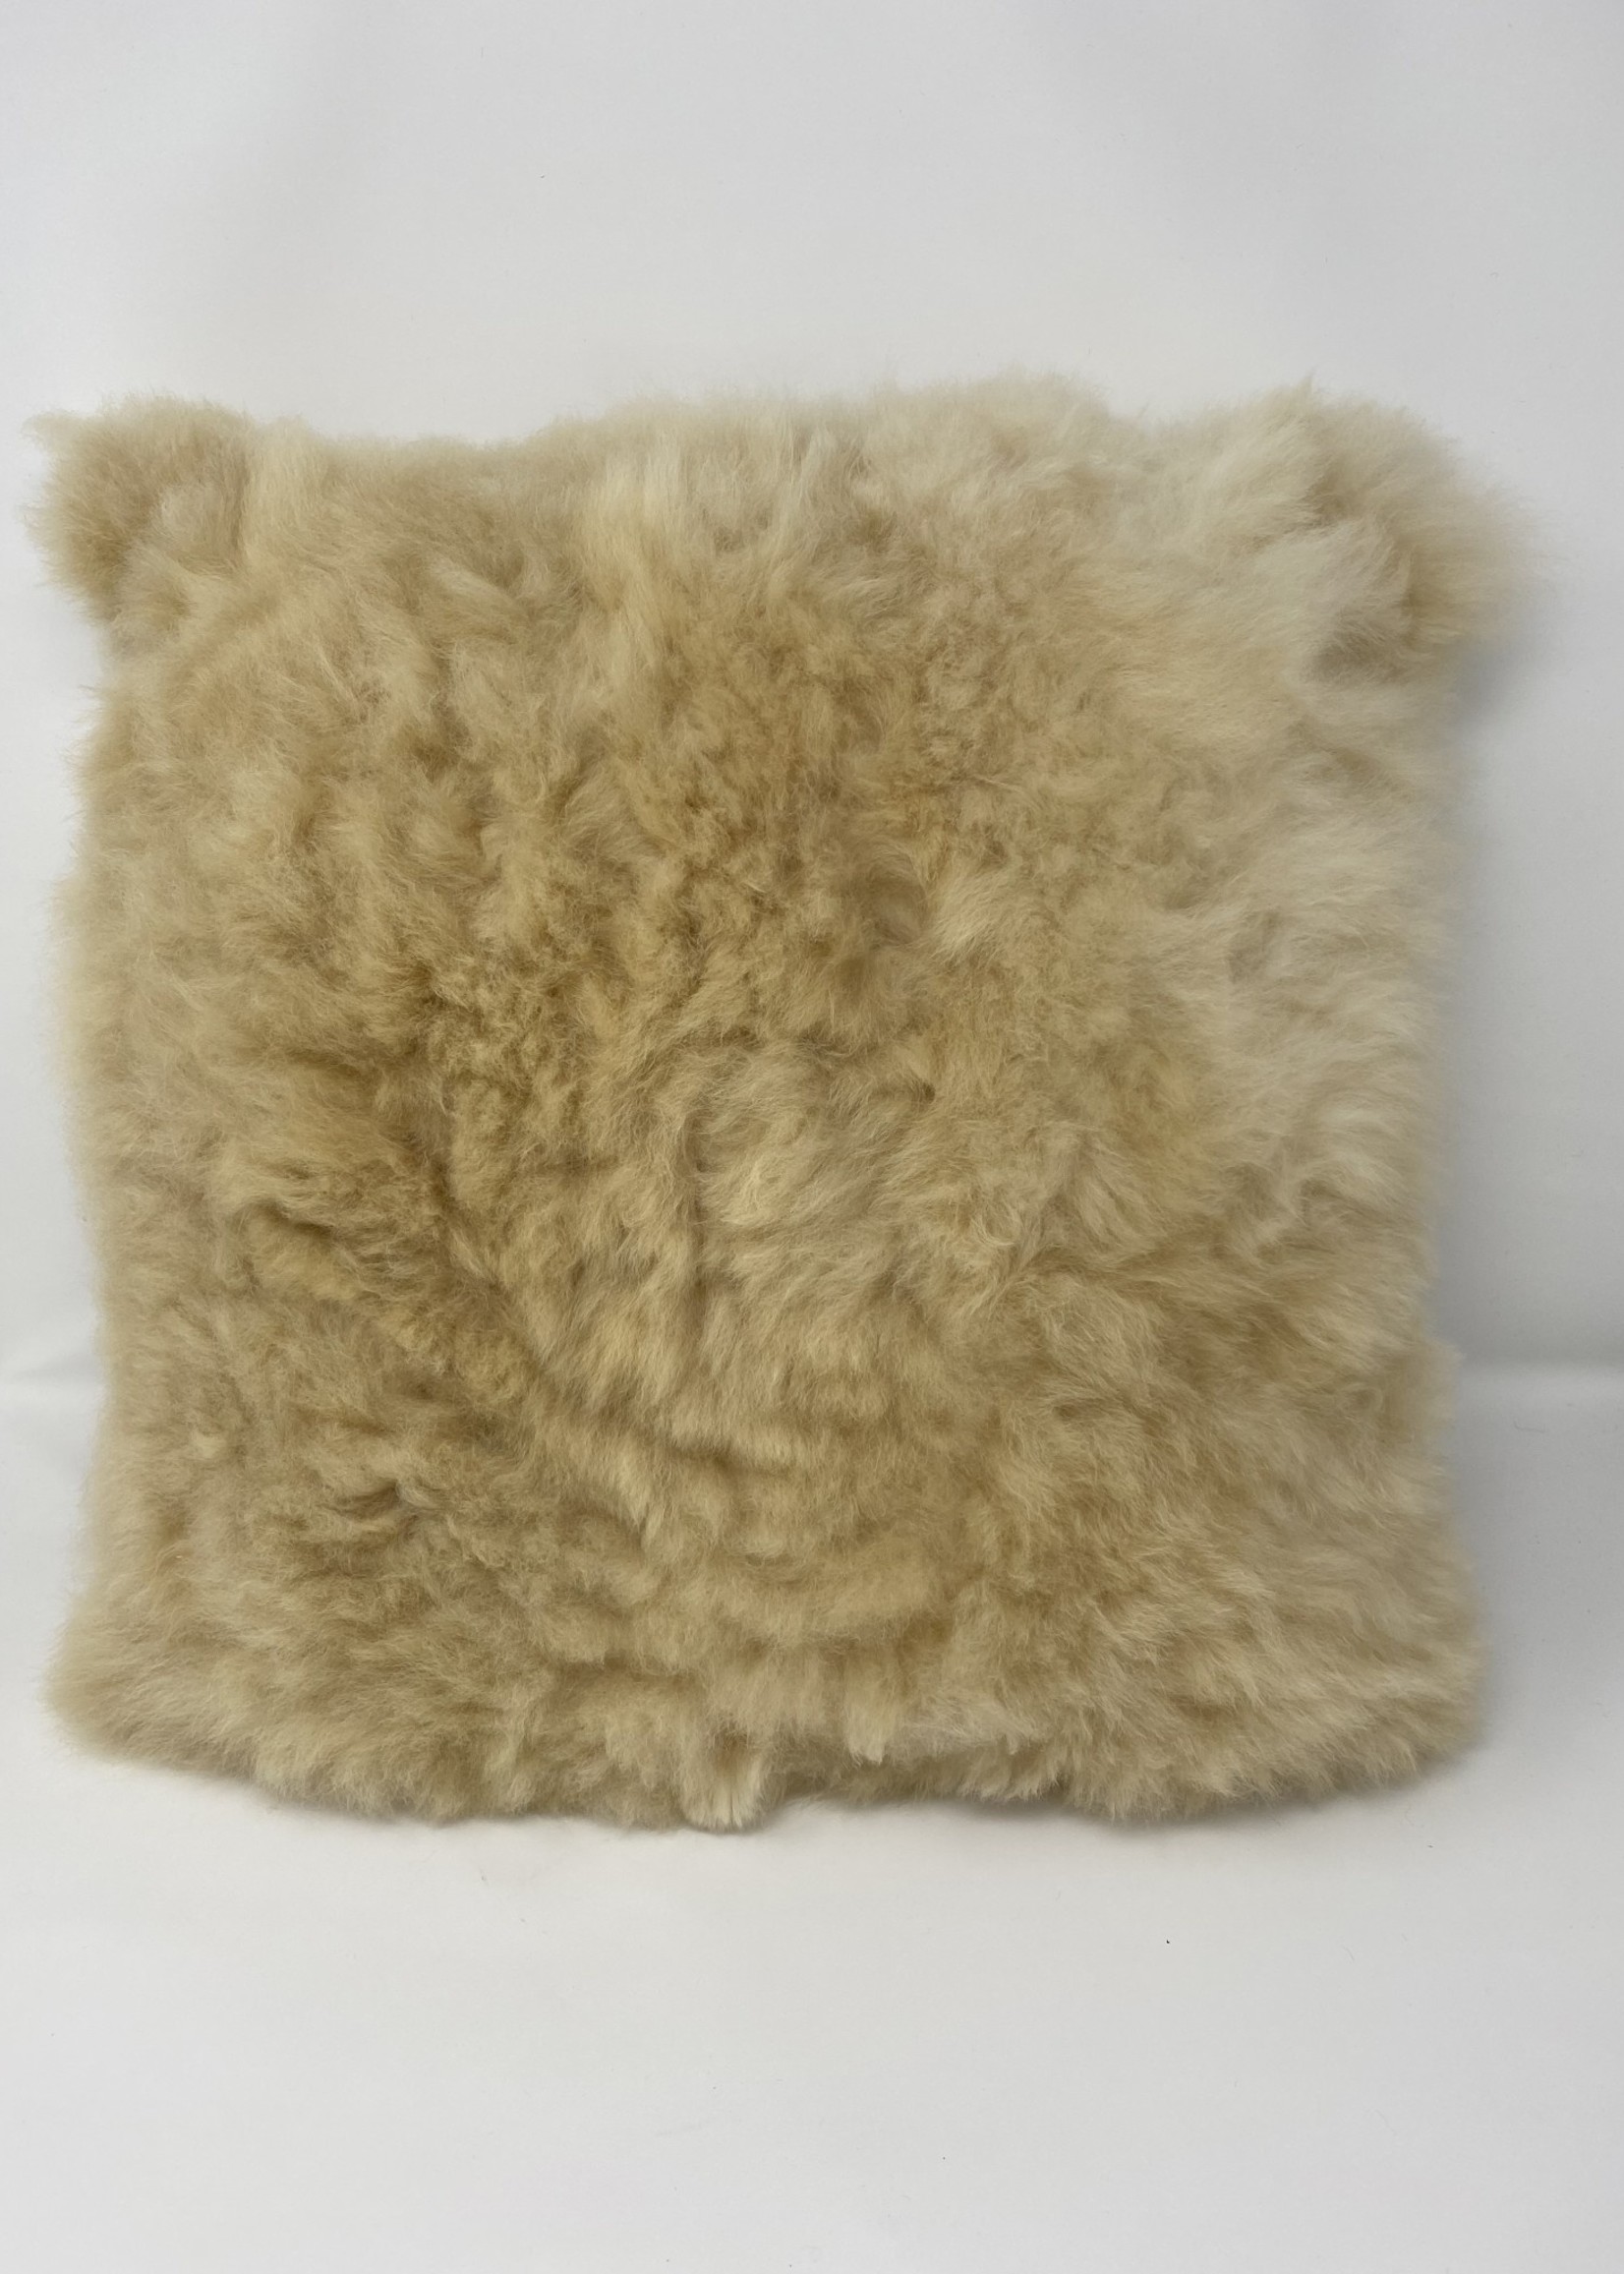 Alpaca Fur Pillow 16"x16"